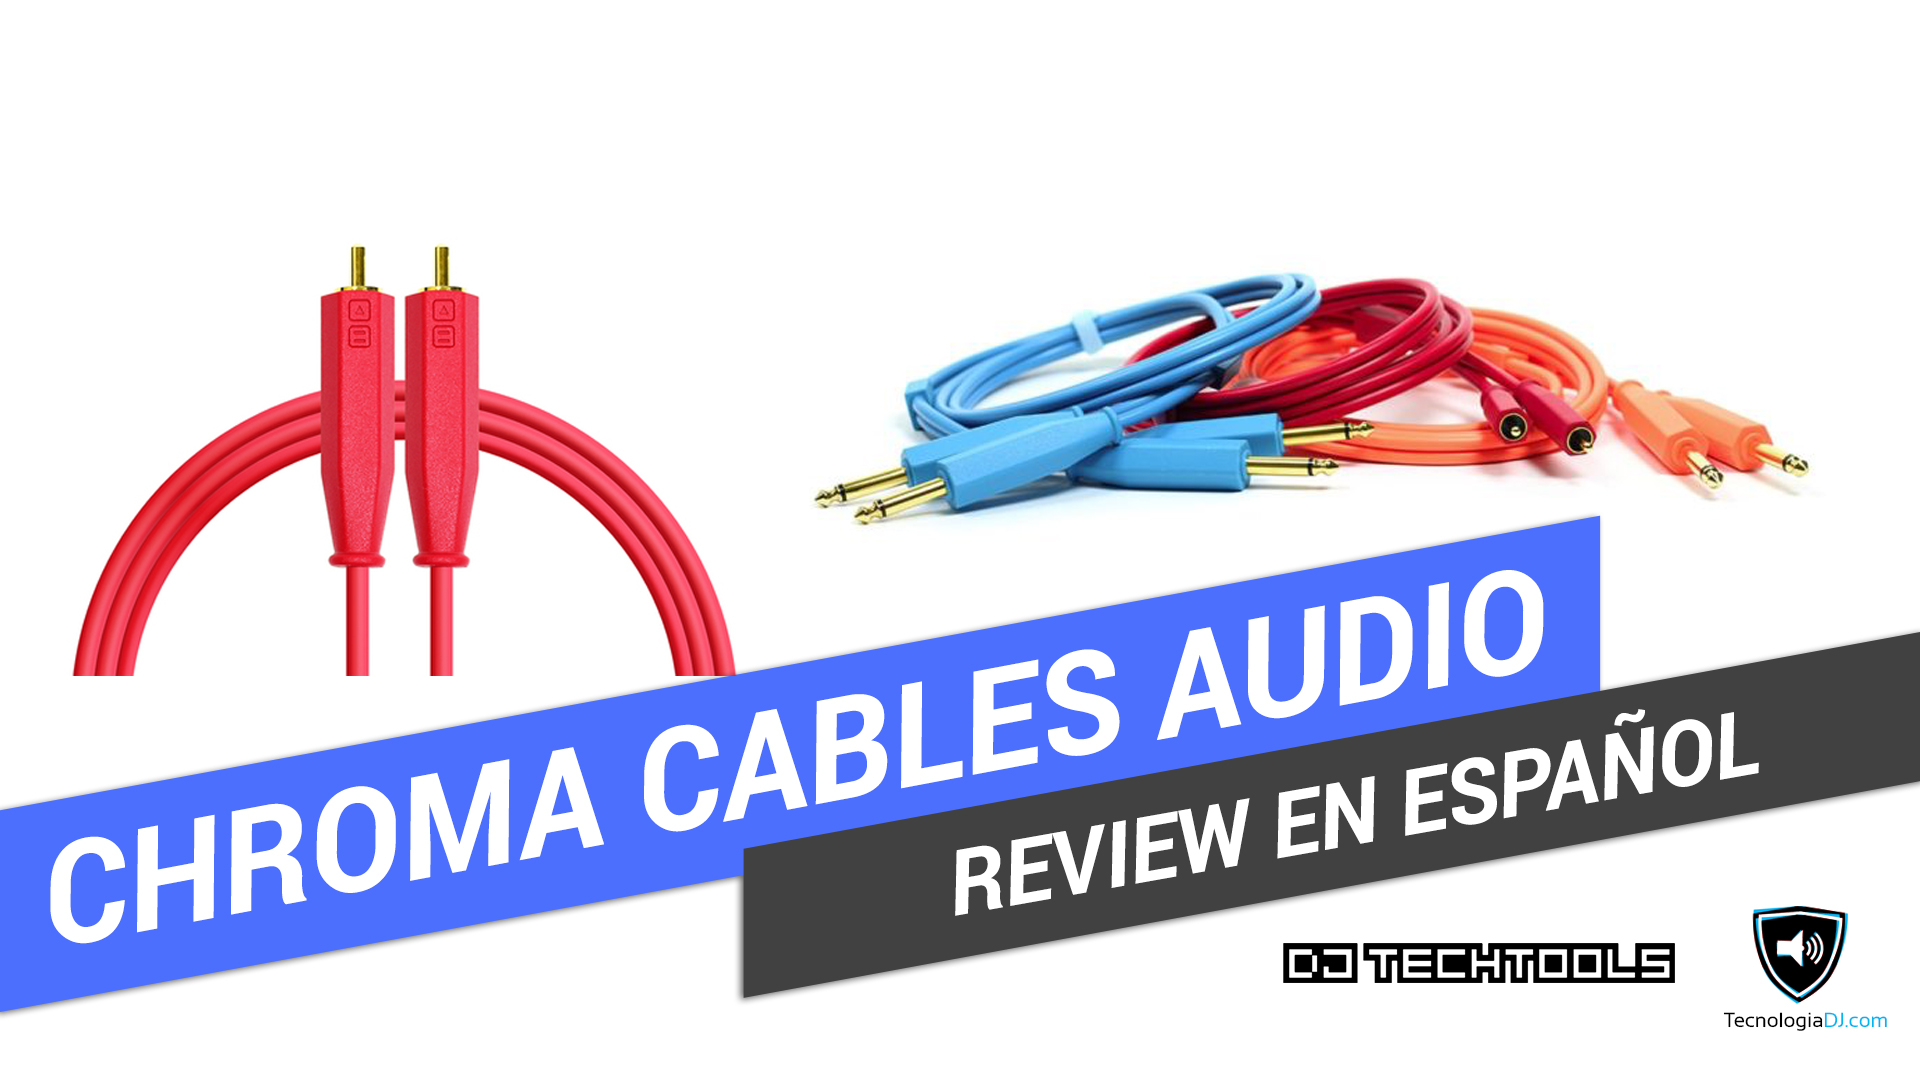 Review en español Chroma Cables Audio de DJ Tech Tools